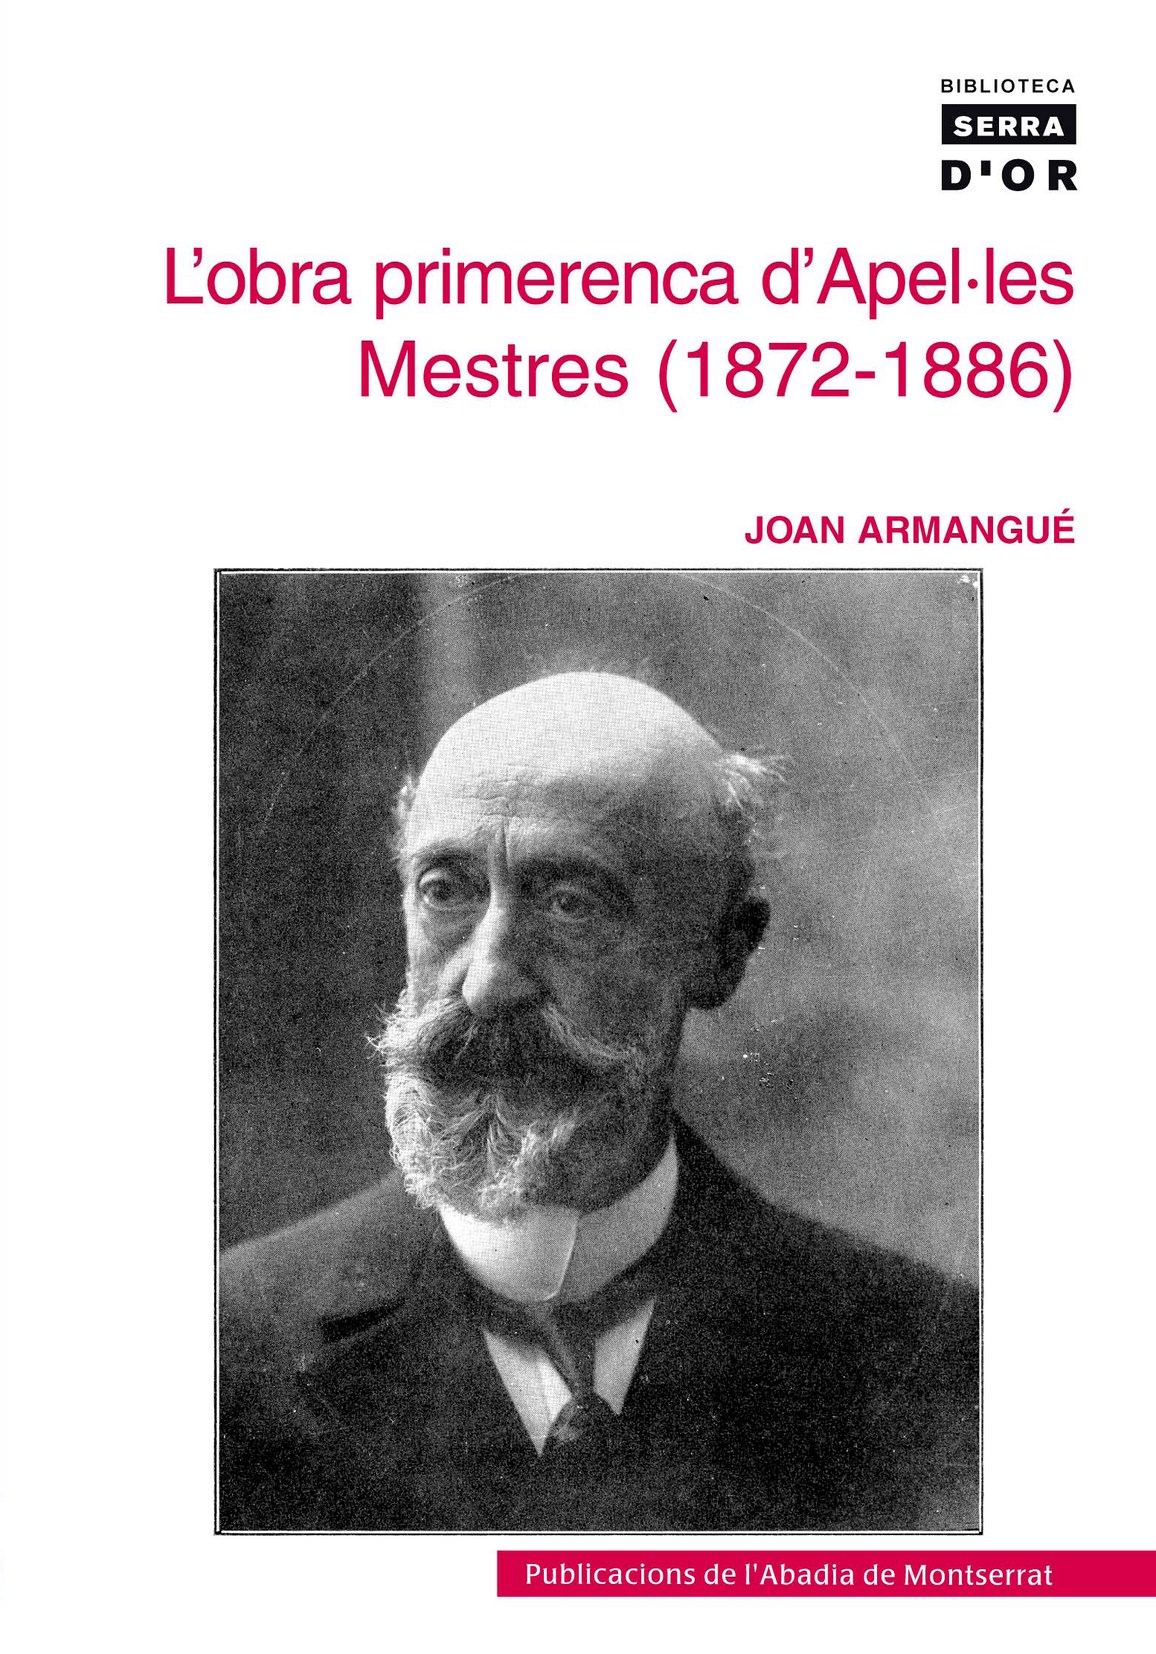 Joan Armangué i Herrero